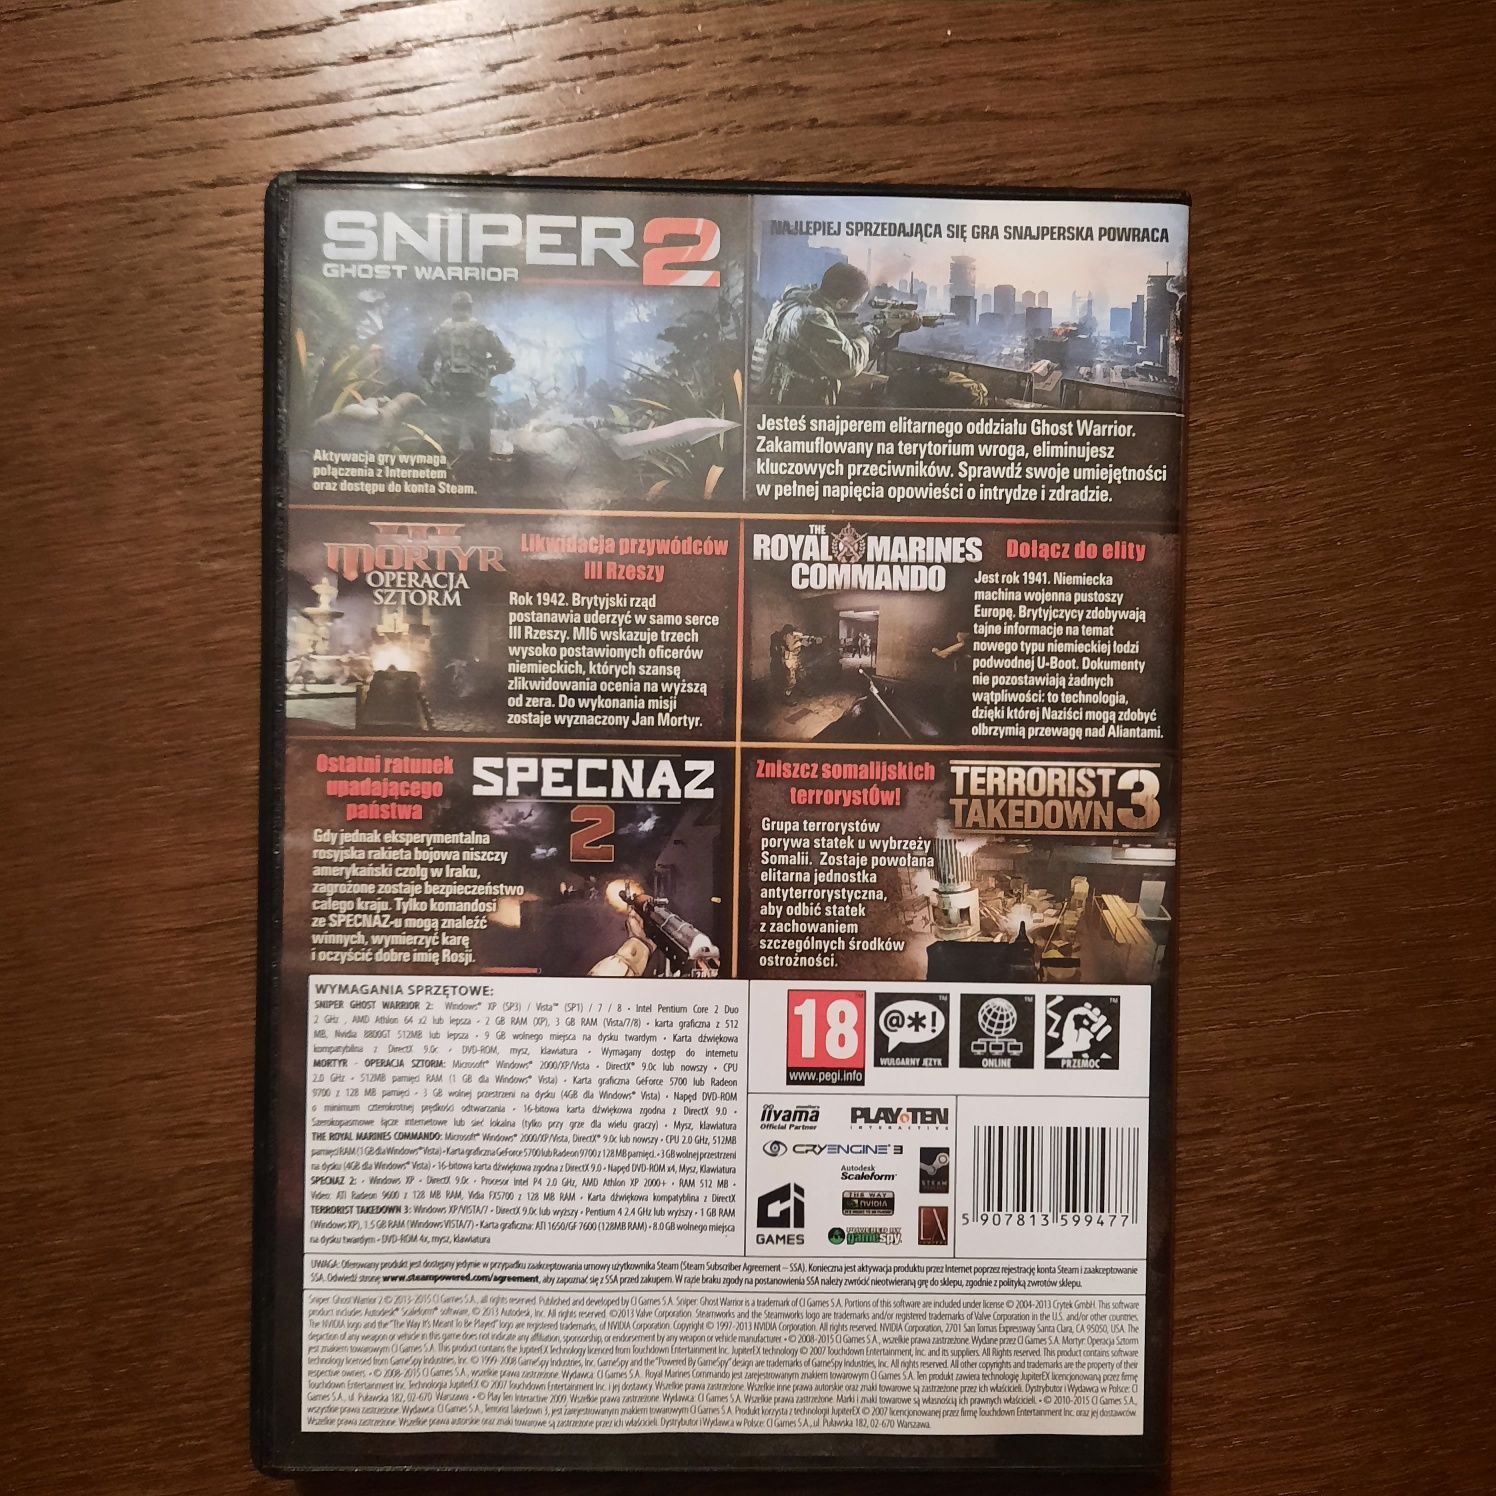 Sniper 2 gra PC bez zarysowania